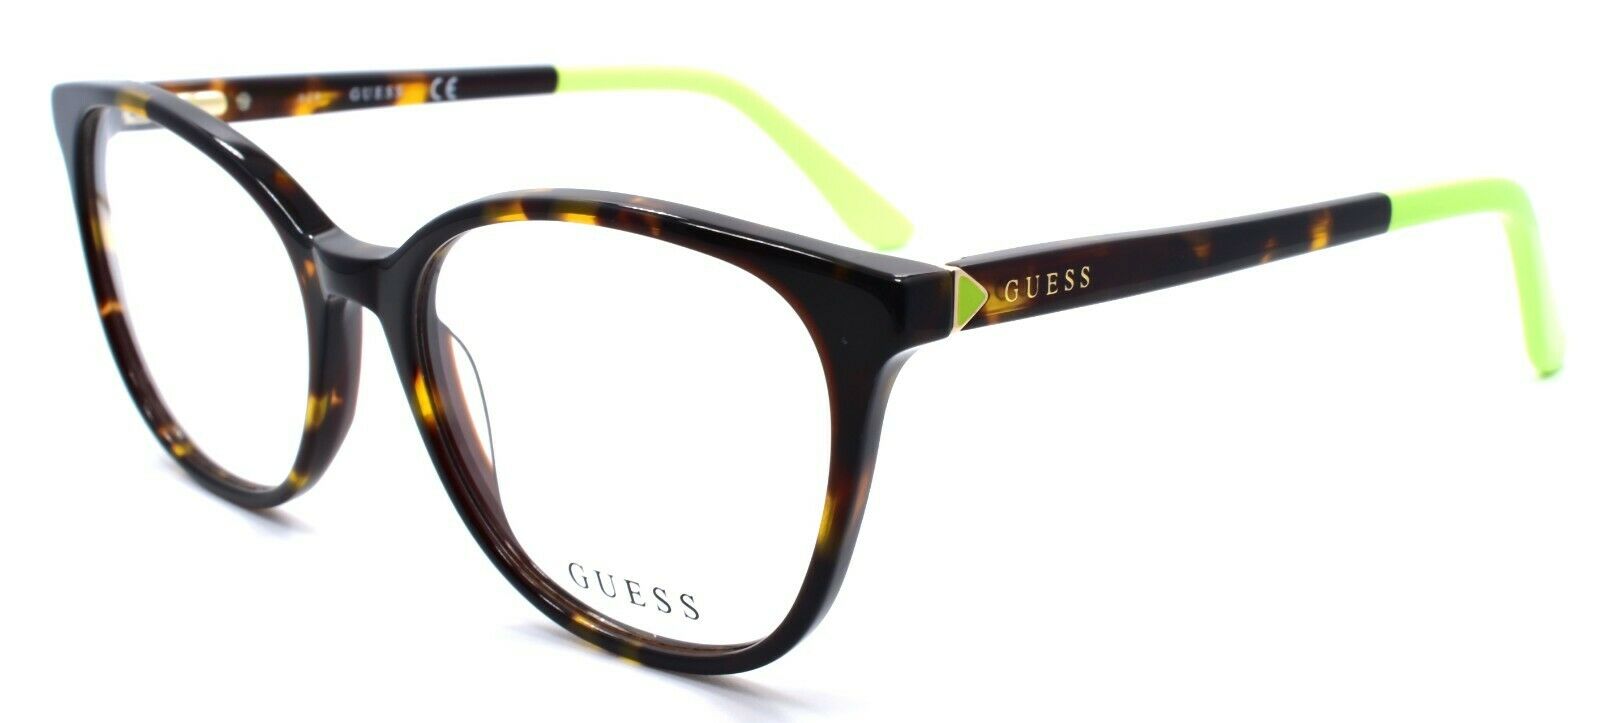 1-GUESS GU2698 056 Women's Eyeglasses Frames 52-16-140 Havana / Lime-889214012630-IKSpecs